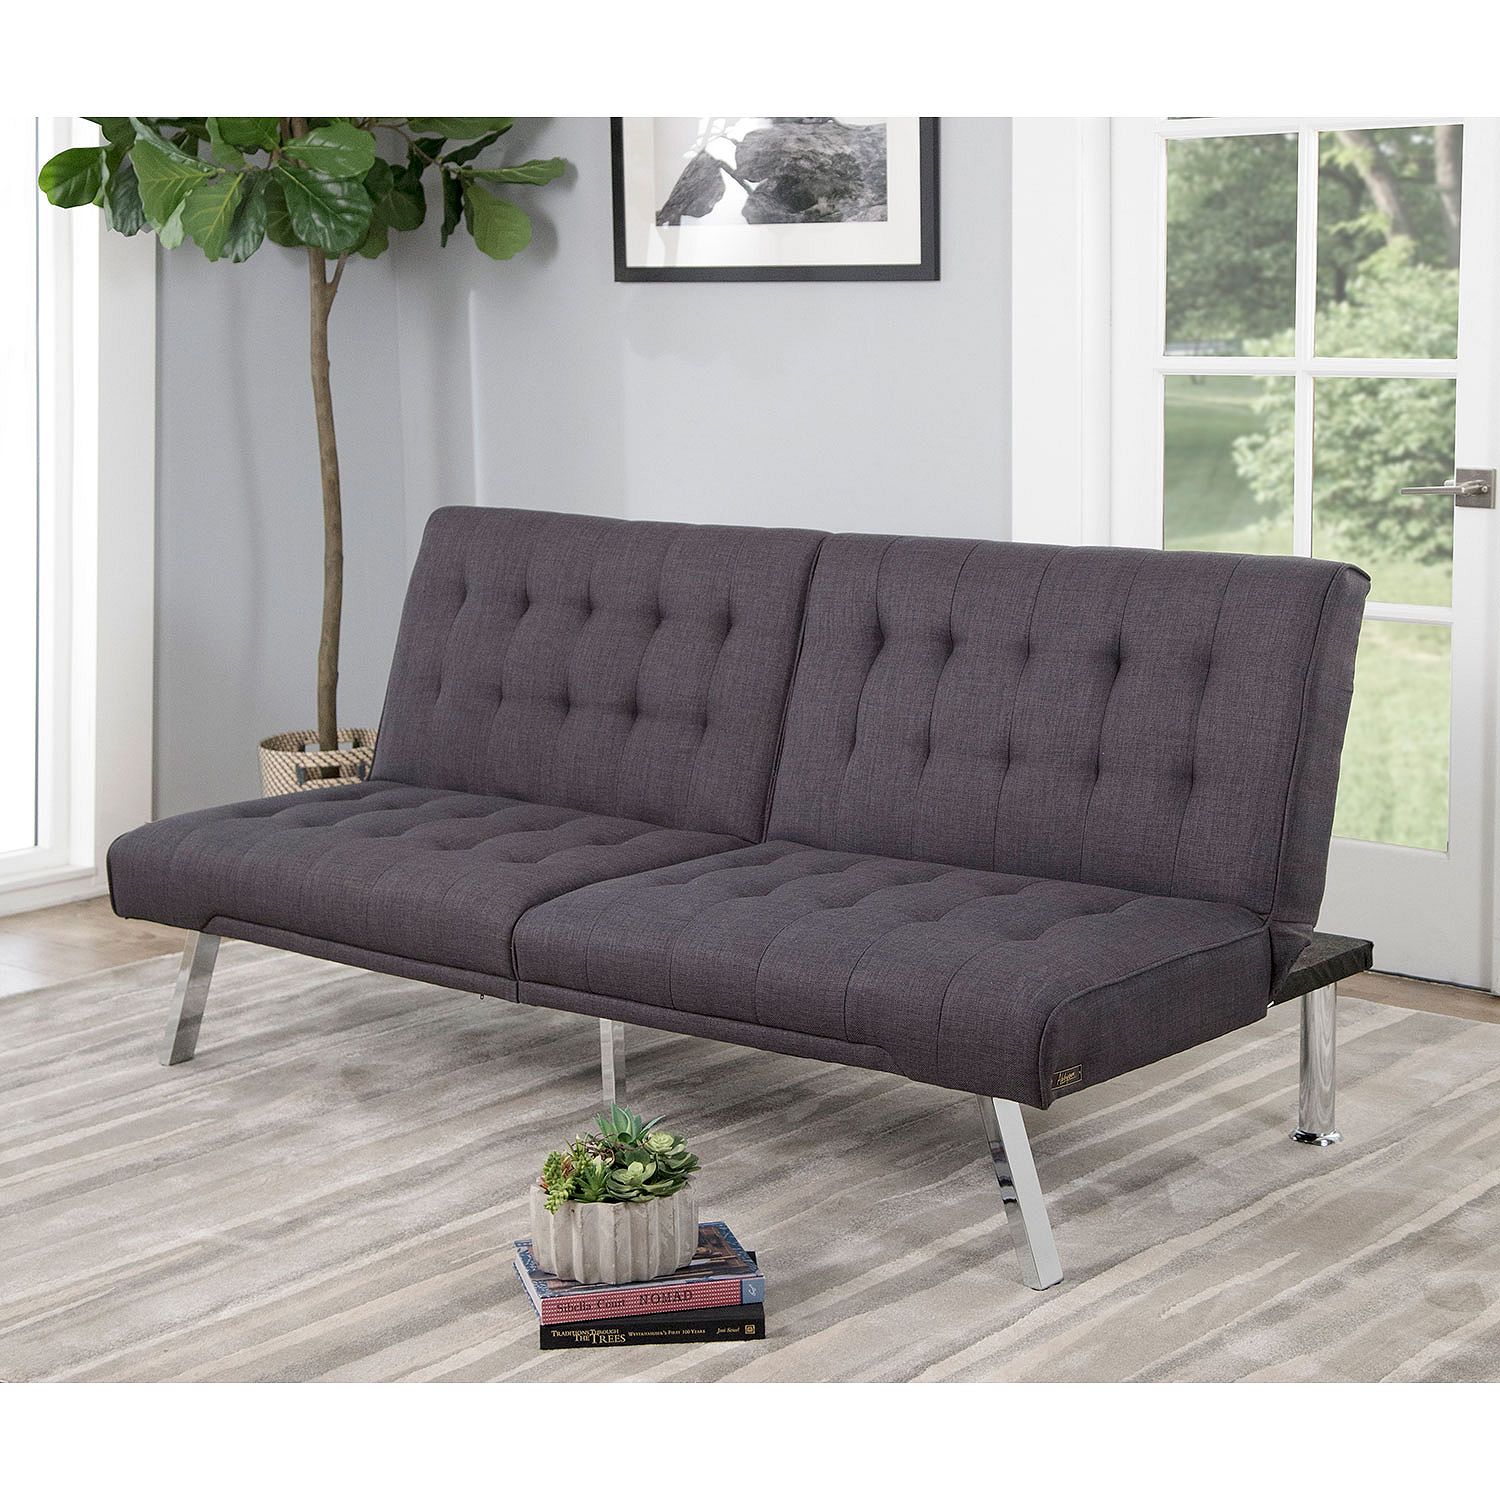 Clayton gray futon sofa bed for $180